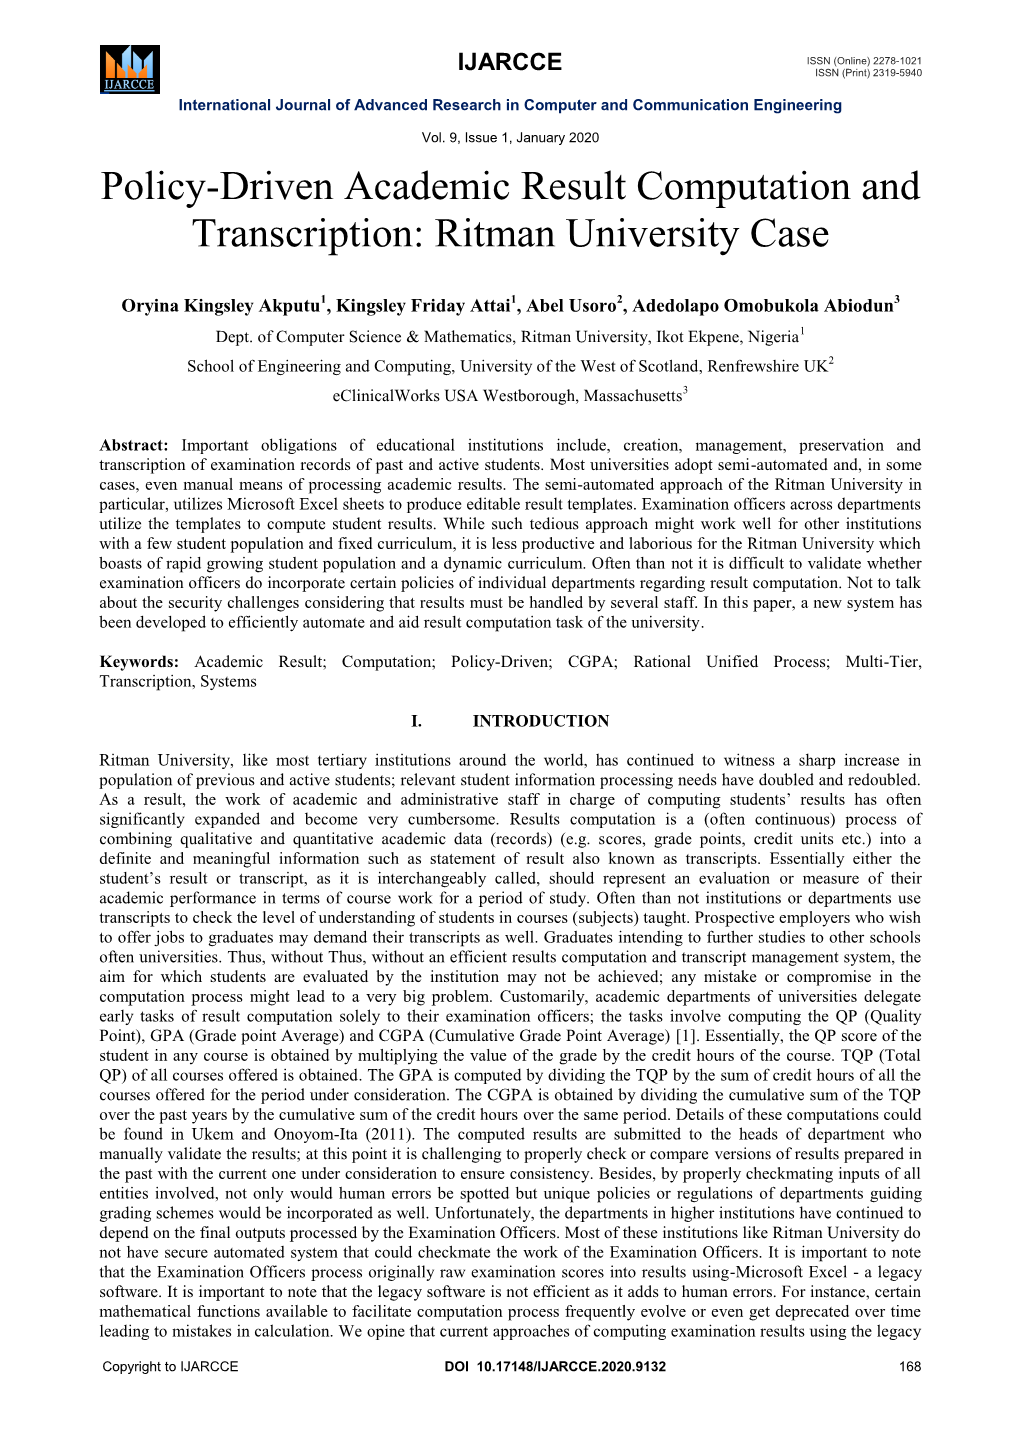 Ritman University Case